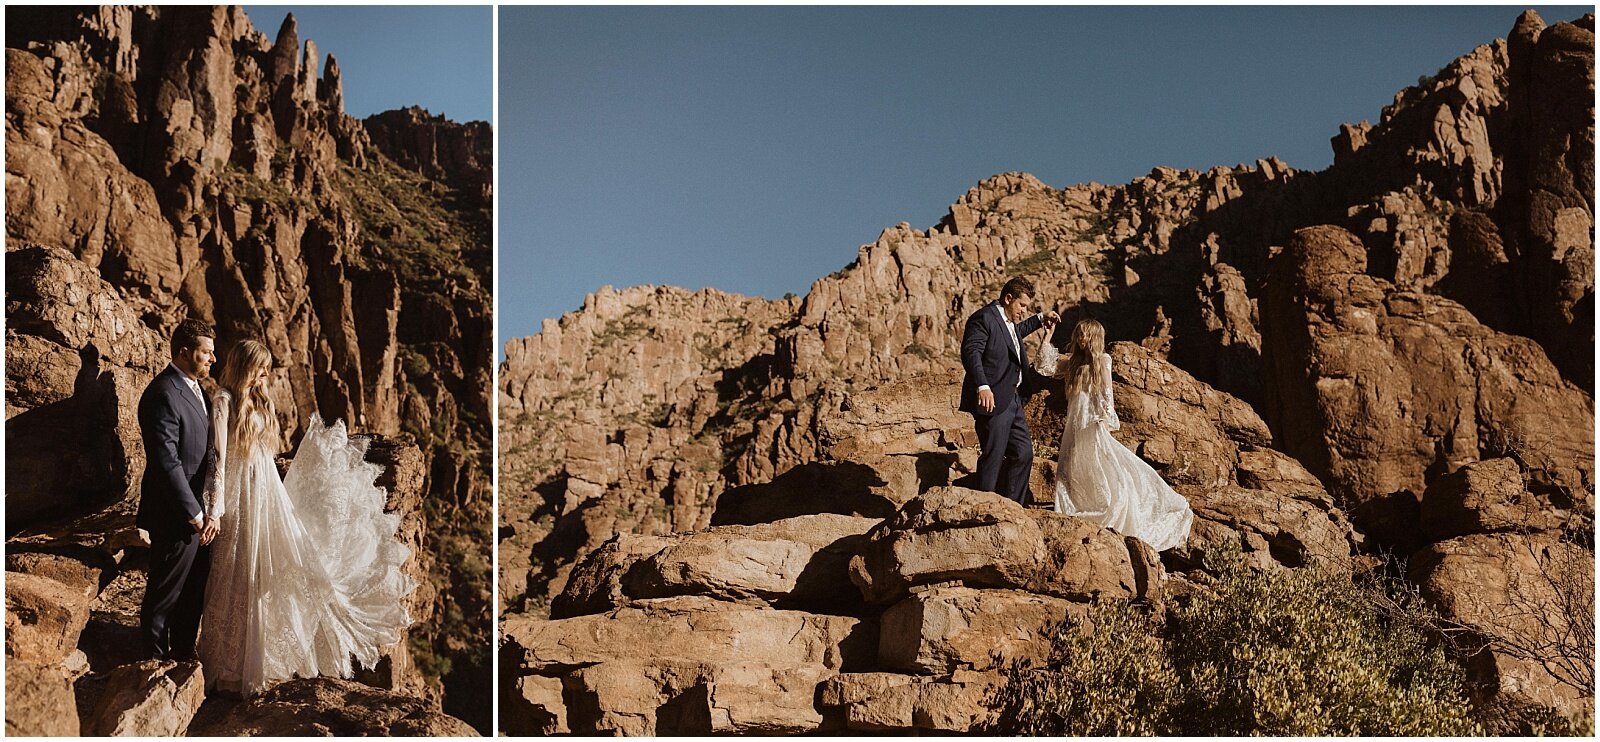 desert bridal session - erika greene photography - arizona couples photographer_0012.jpg